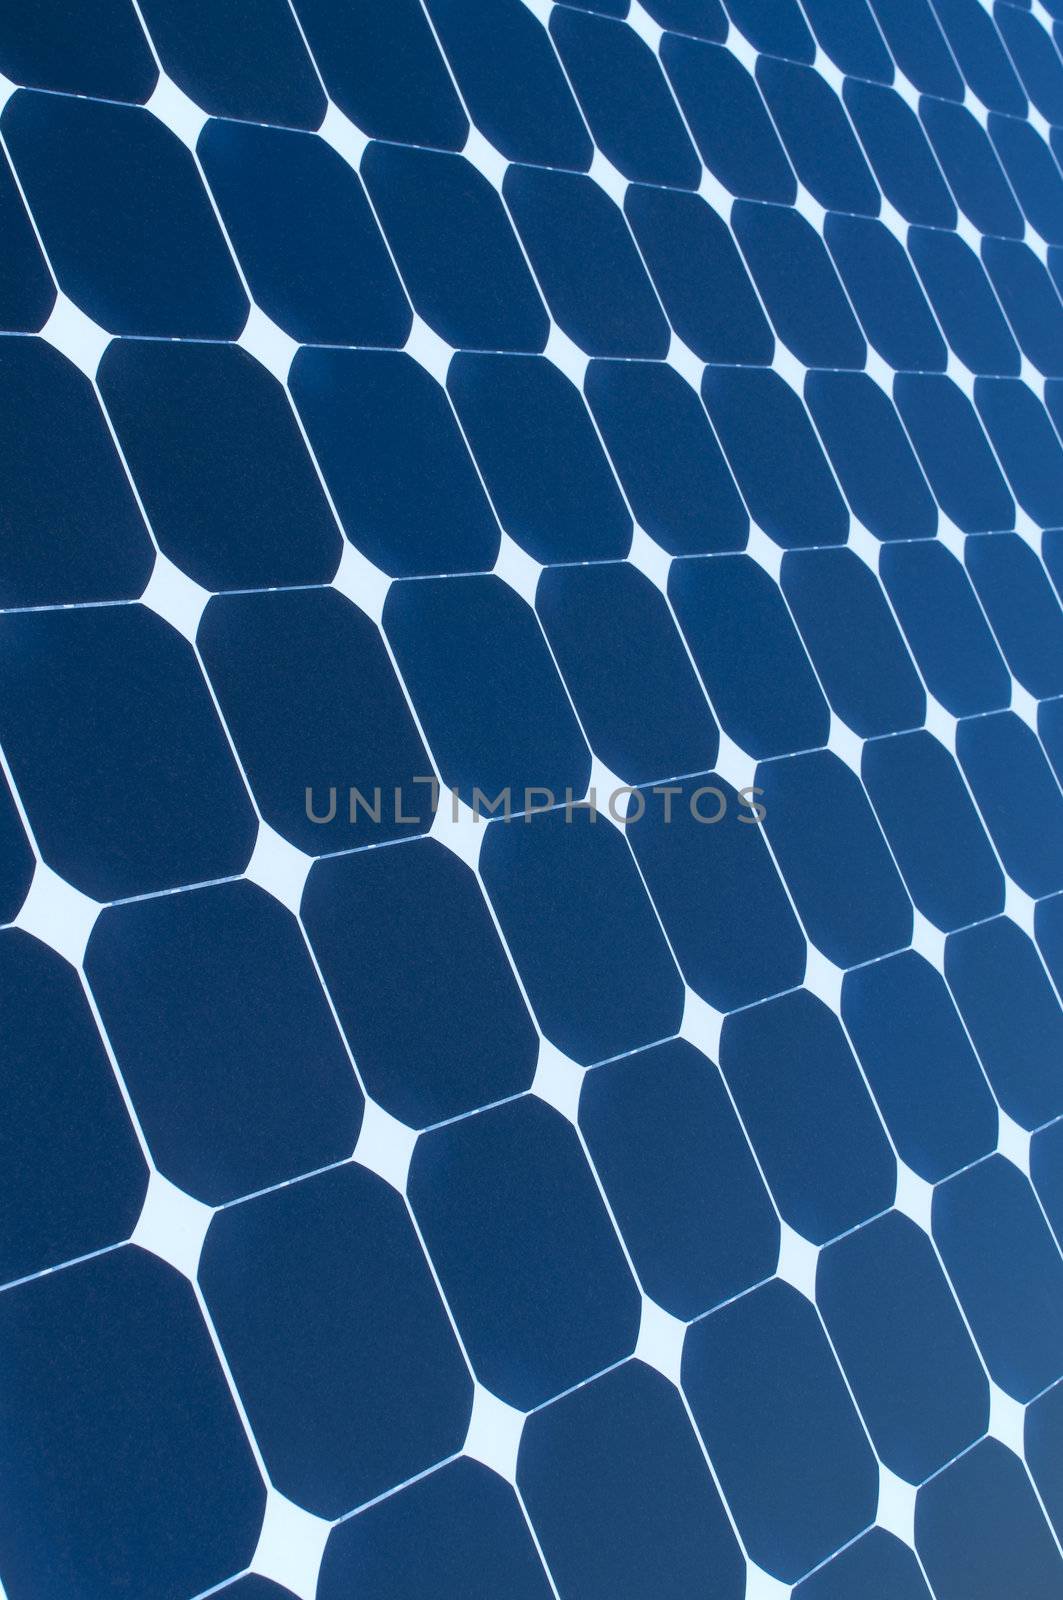 Solar Panel by Rainman